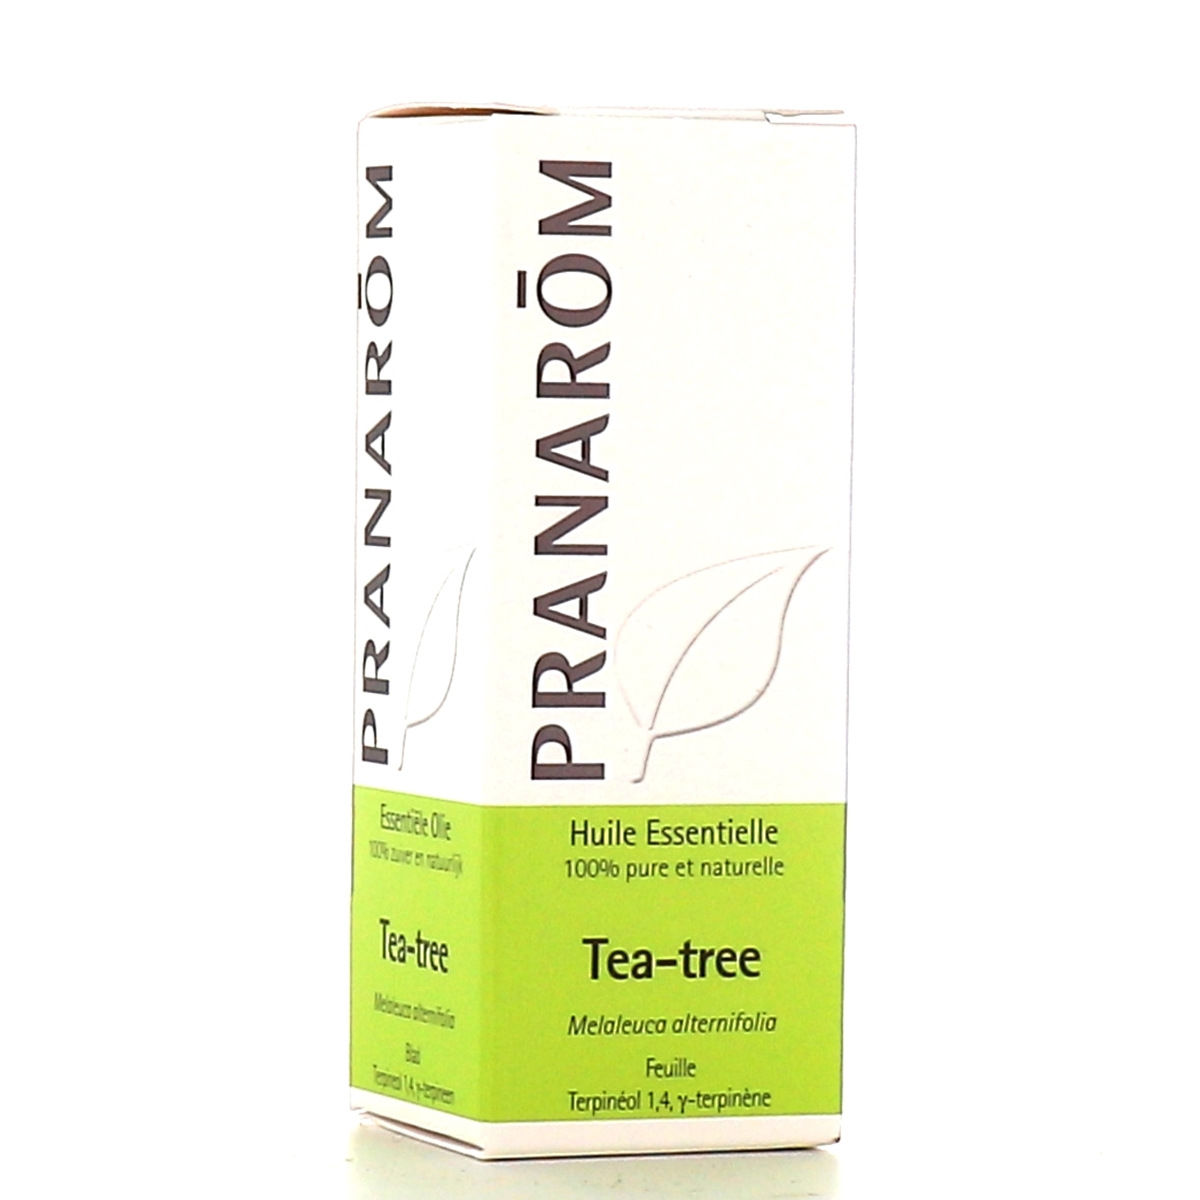 PRANAROM HUILE ESSENTIELLE BIO DE TEA-TREE 10ML à prix discount